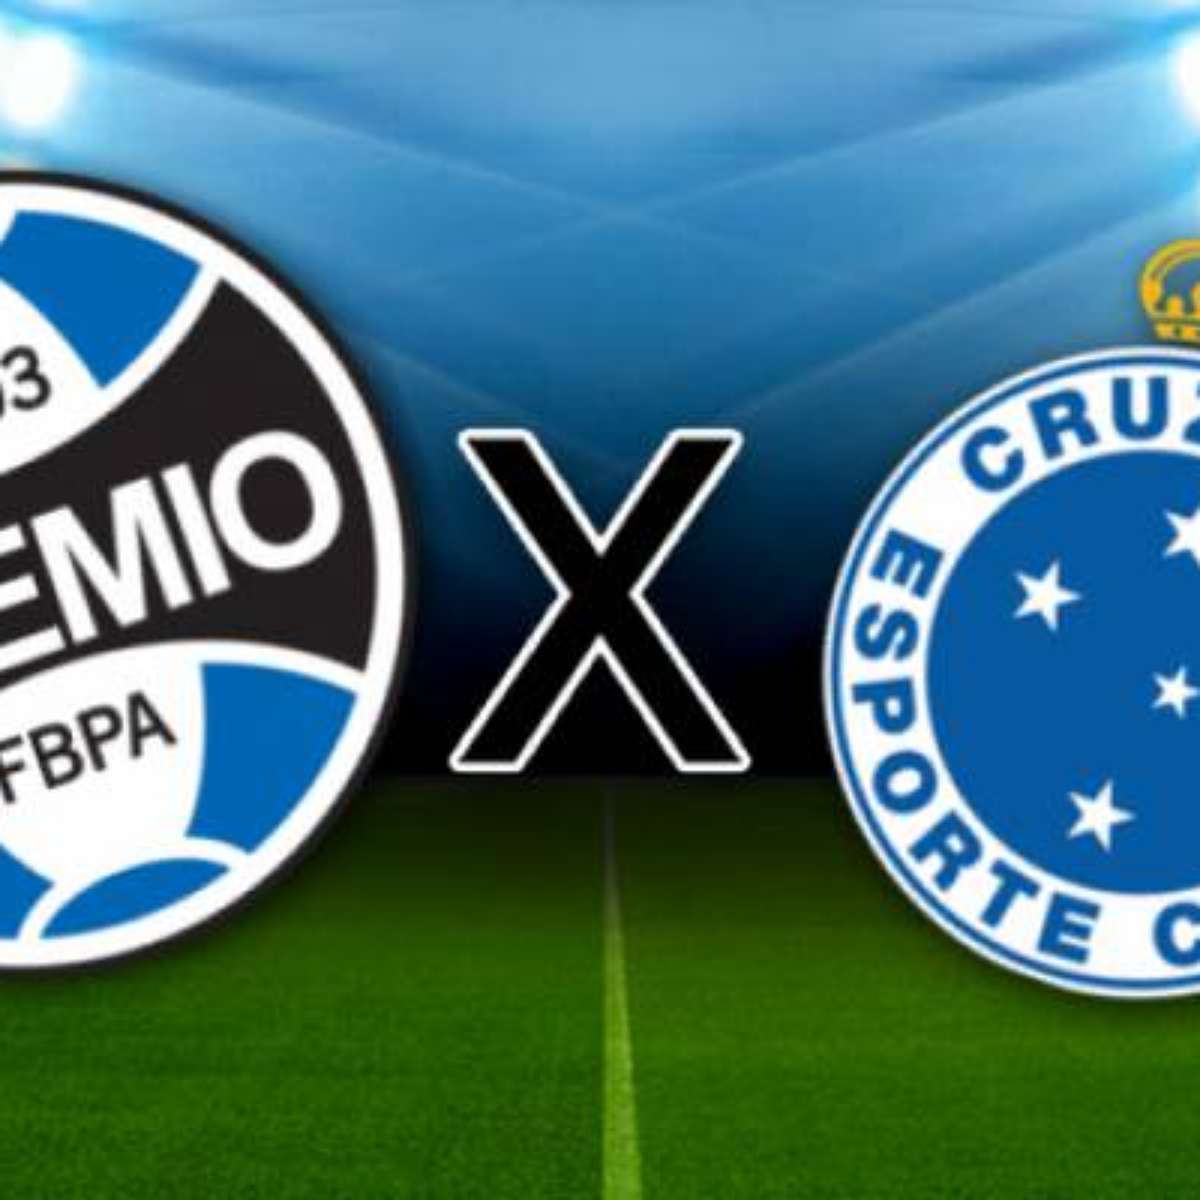 Cruzeiro vs América-MG: A Rivalry That Defines Minas Gerais Football